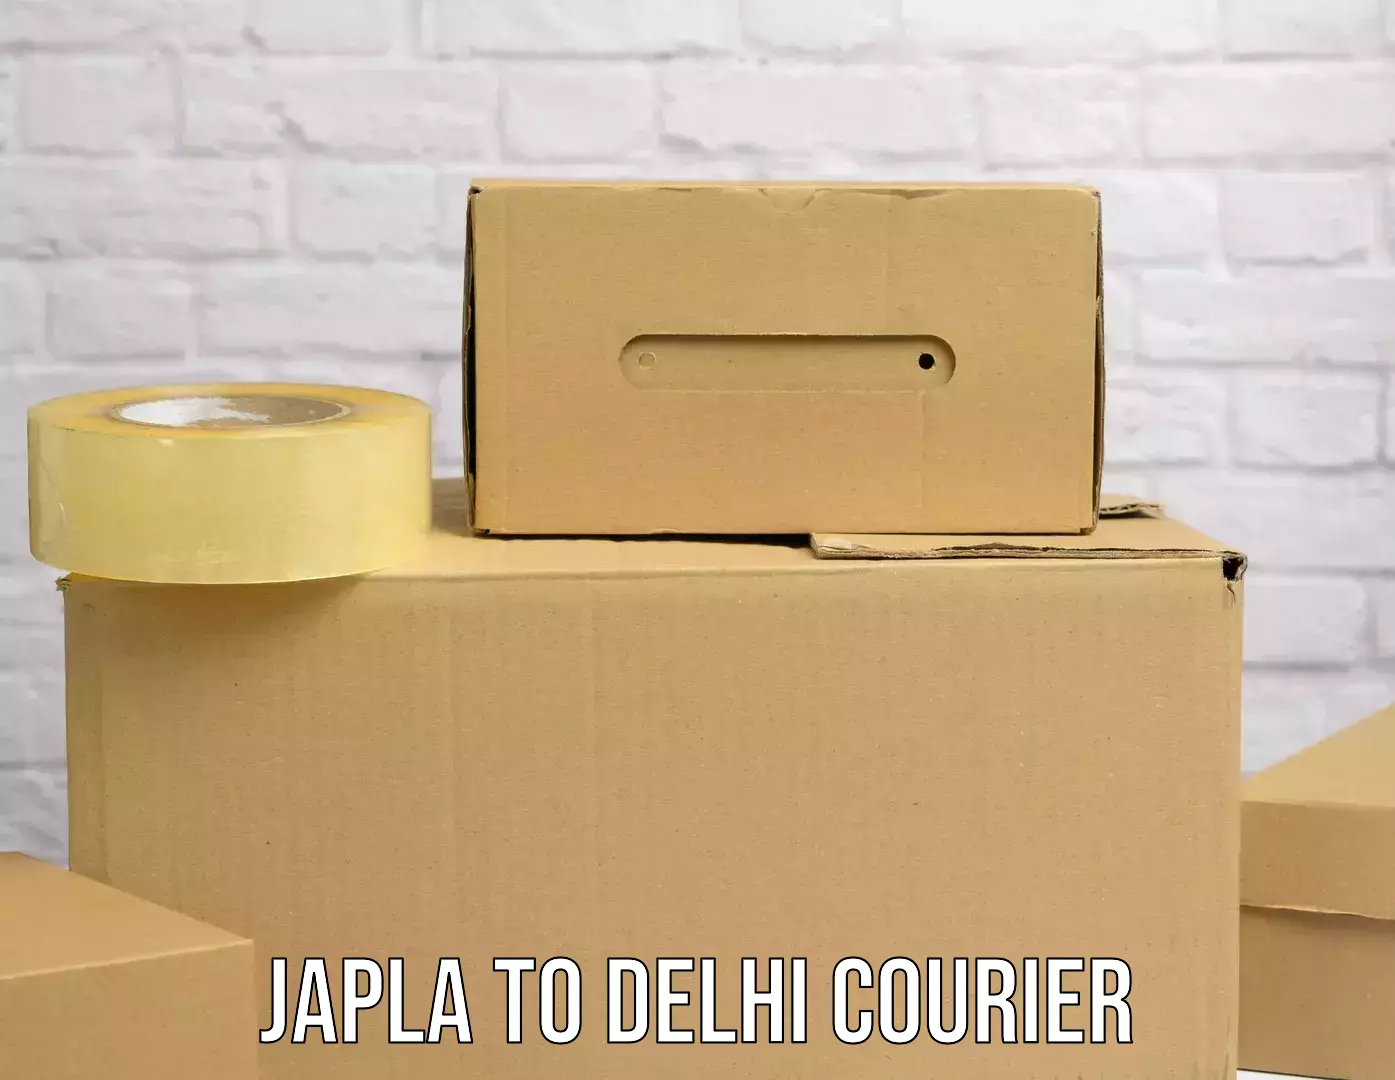 Efficient freight service Japla to University of Delhi